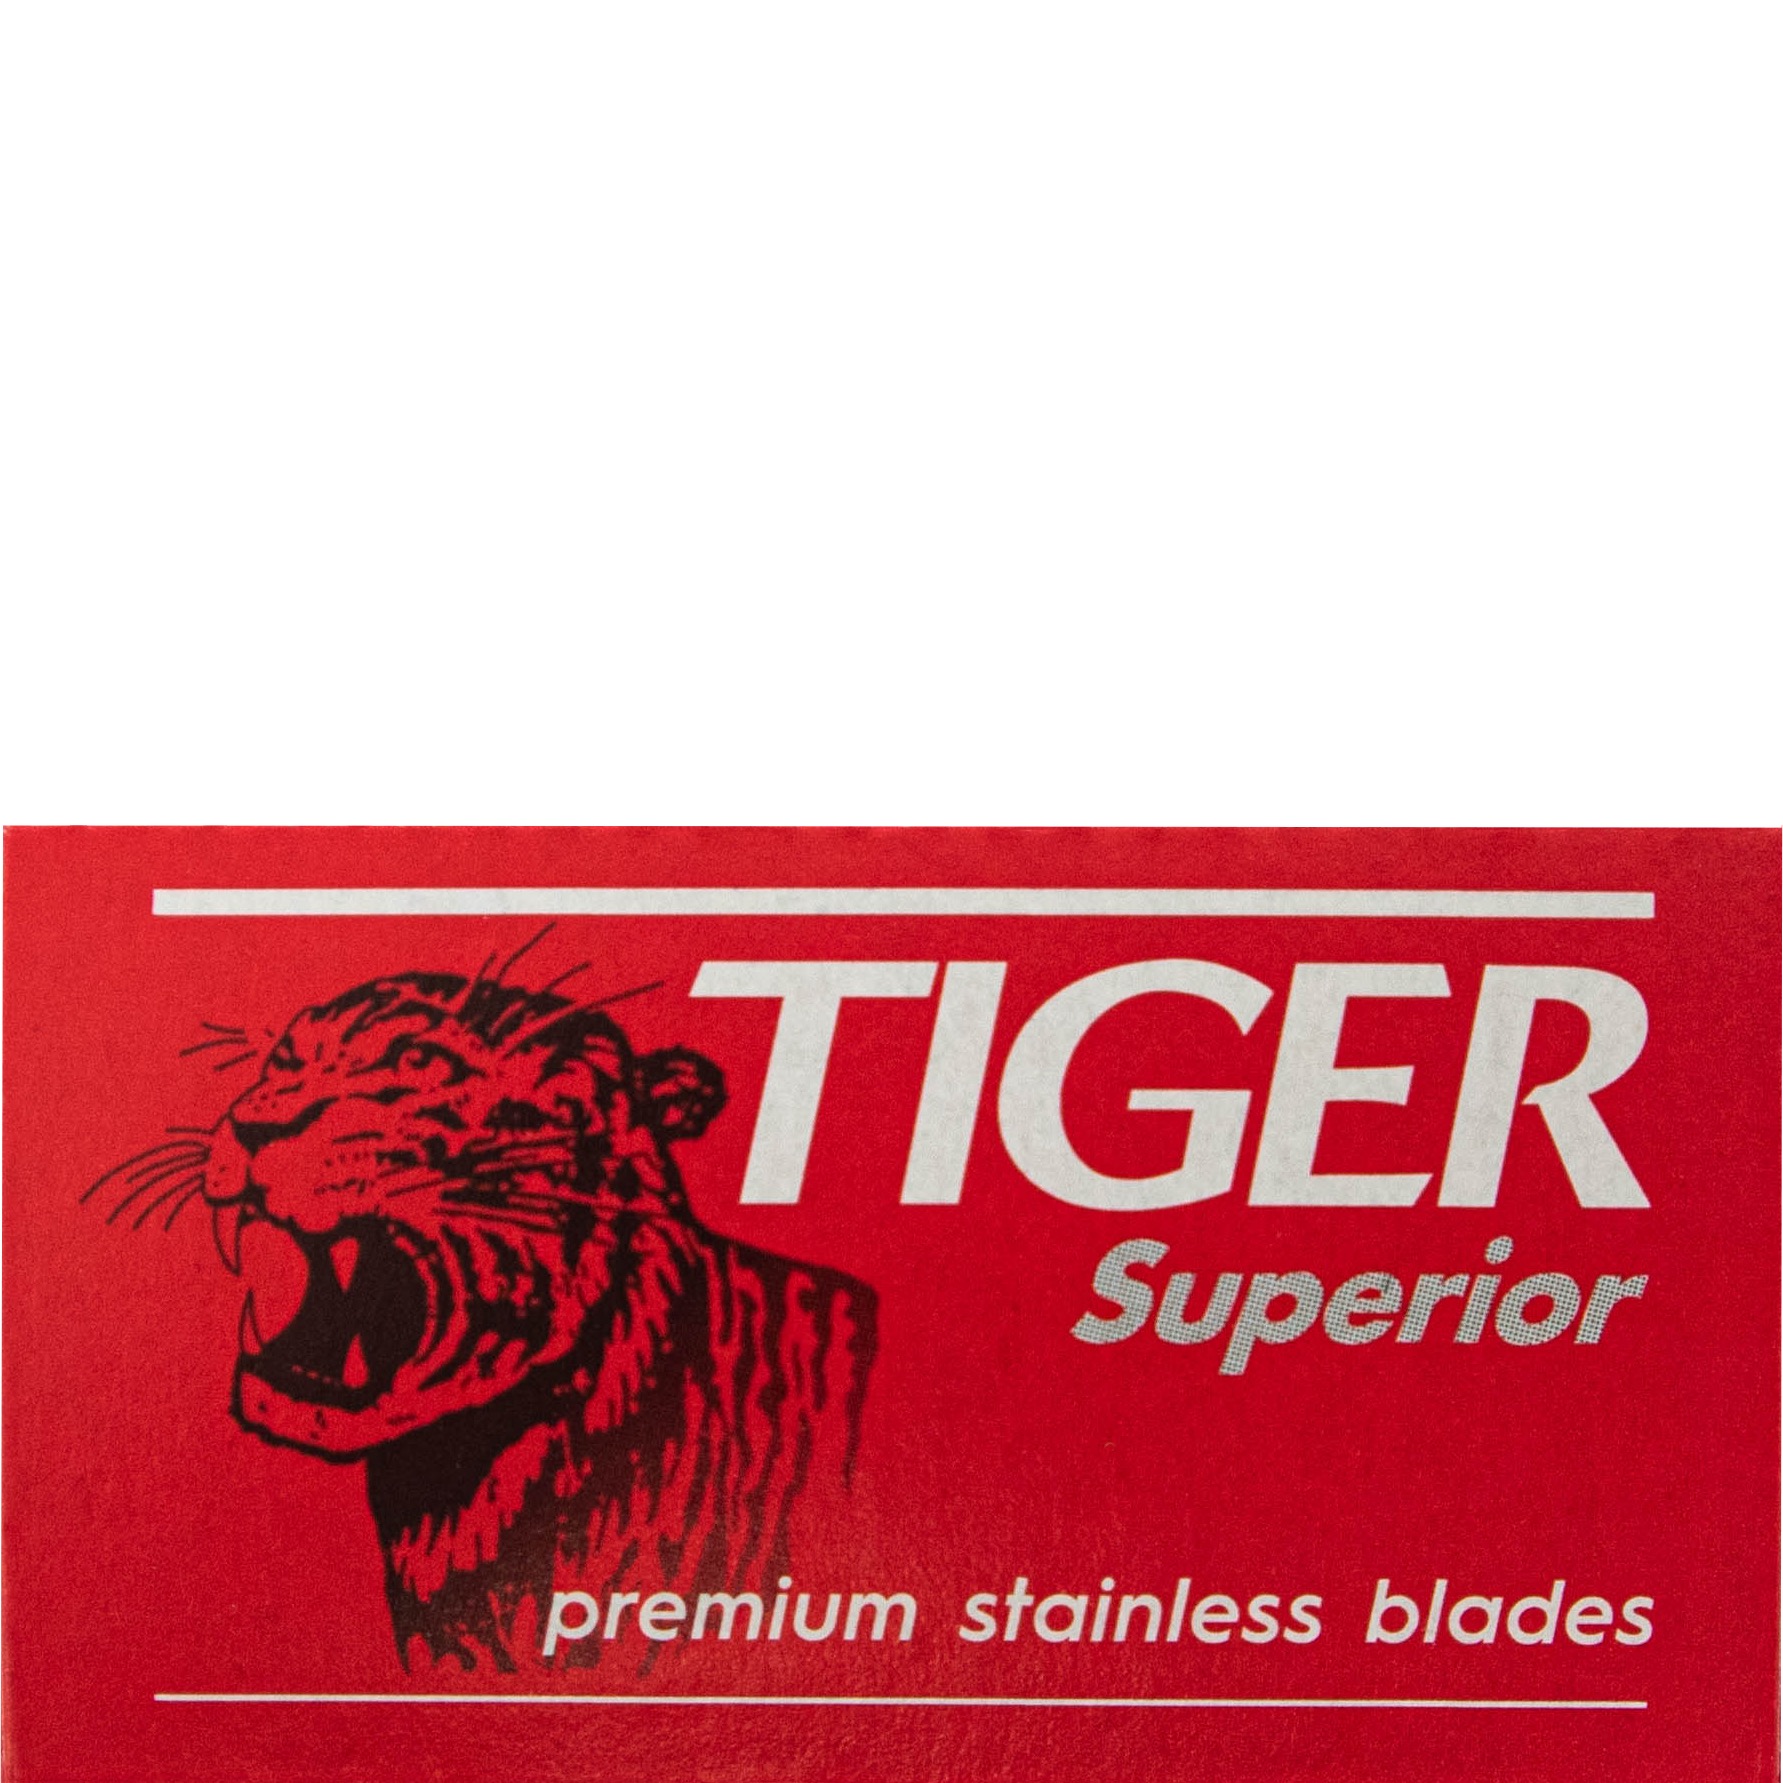 Tiger Superiour Double Edge Blades - 2.1 - DEB-TIGER-SUP